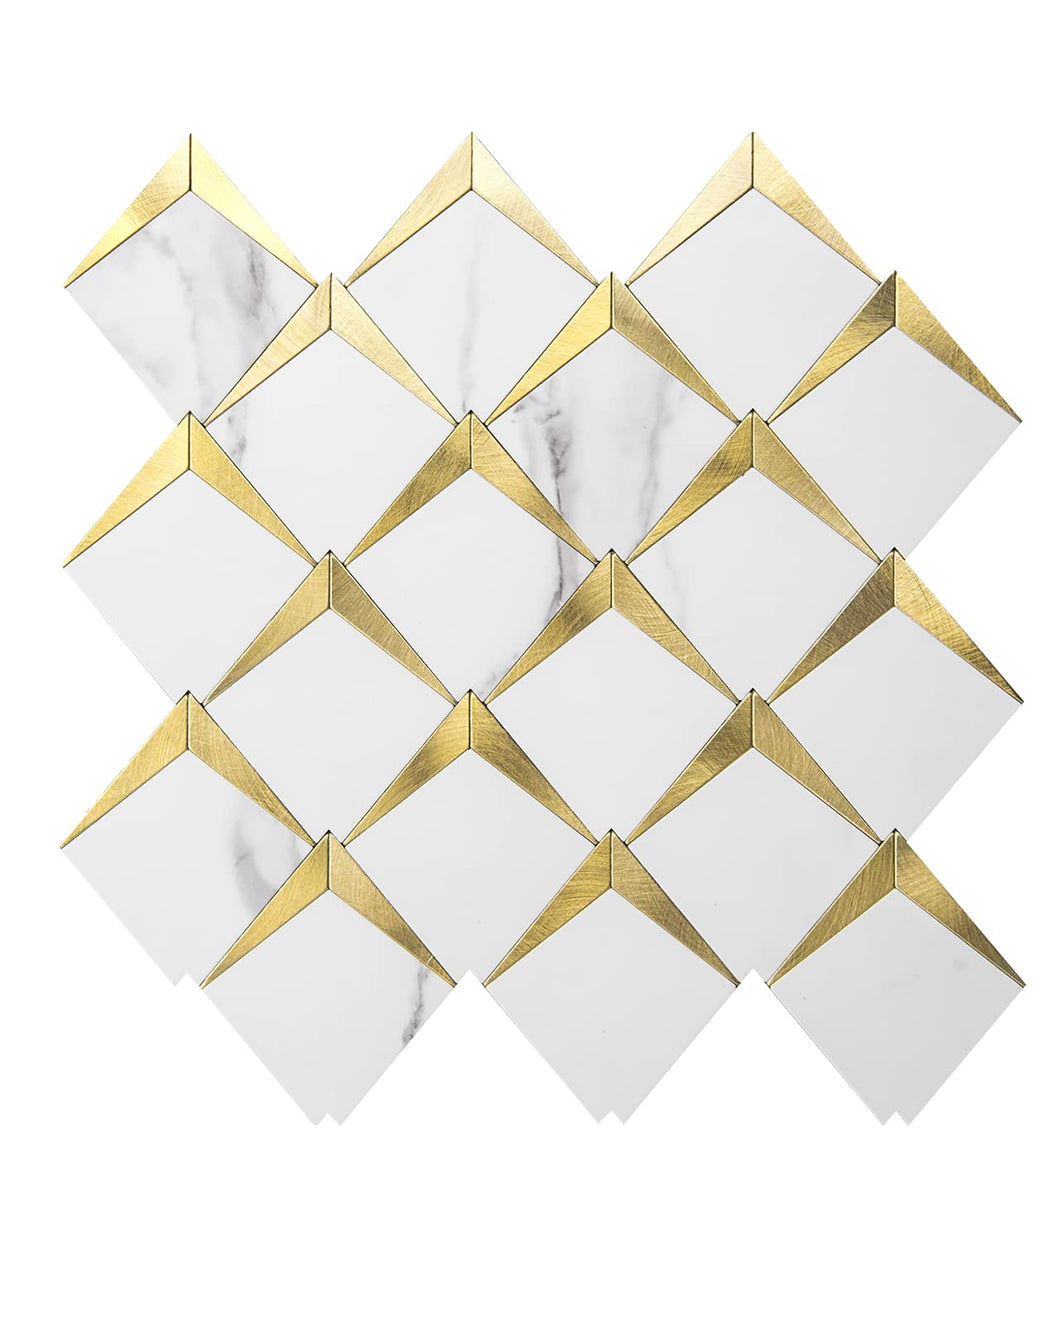 Art3d 10-Sheet Peel and Stick Backsplash,, Self-Adhesive Wall Stickers, Diamond Mosaic Tiles